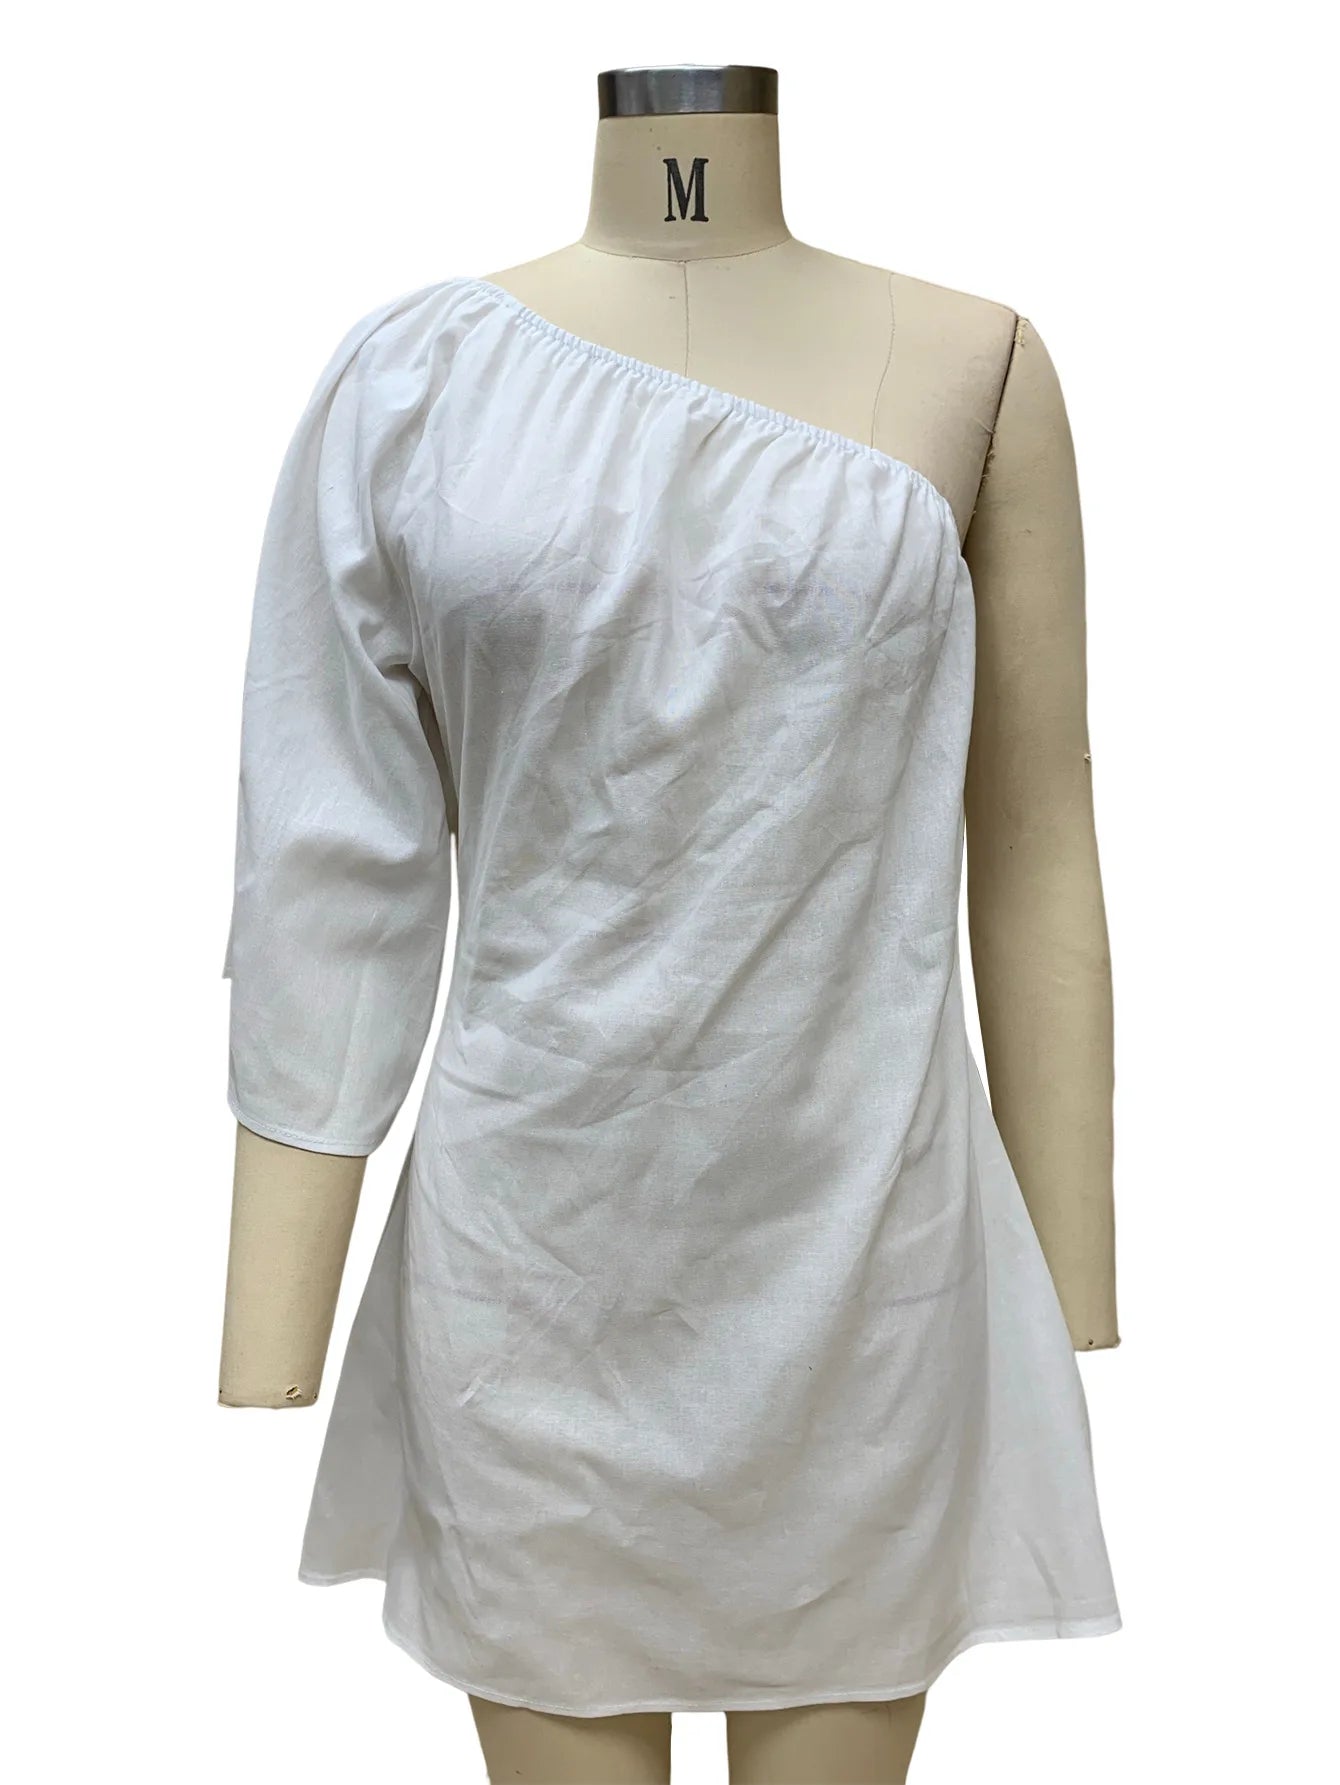 2023 Summer One-Shoulder Cotton Linen Mini Dress